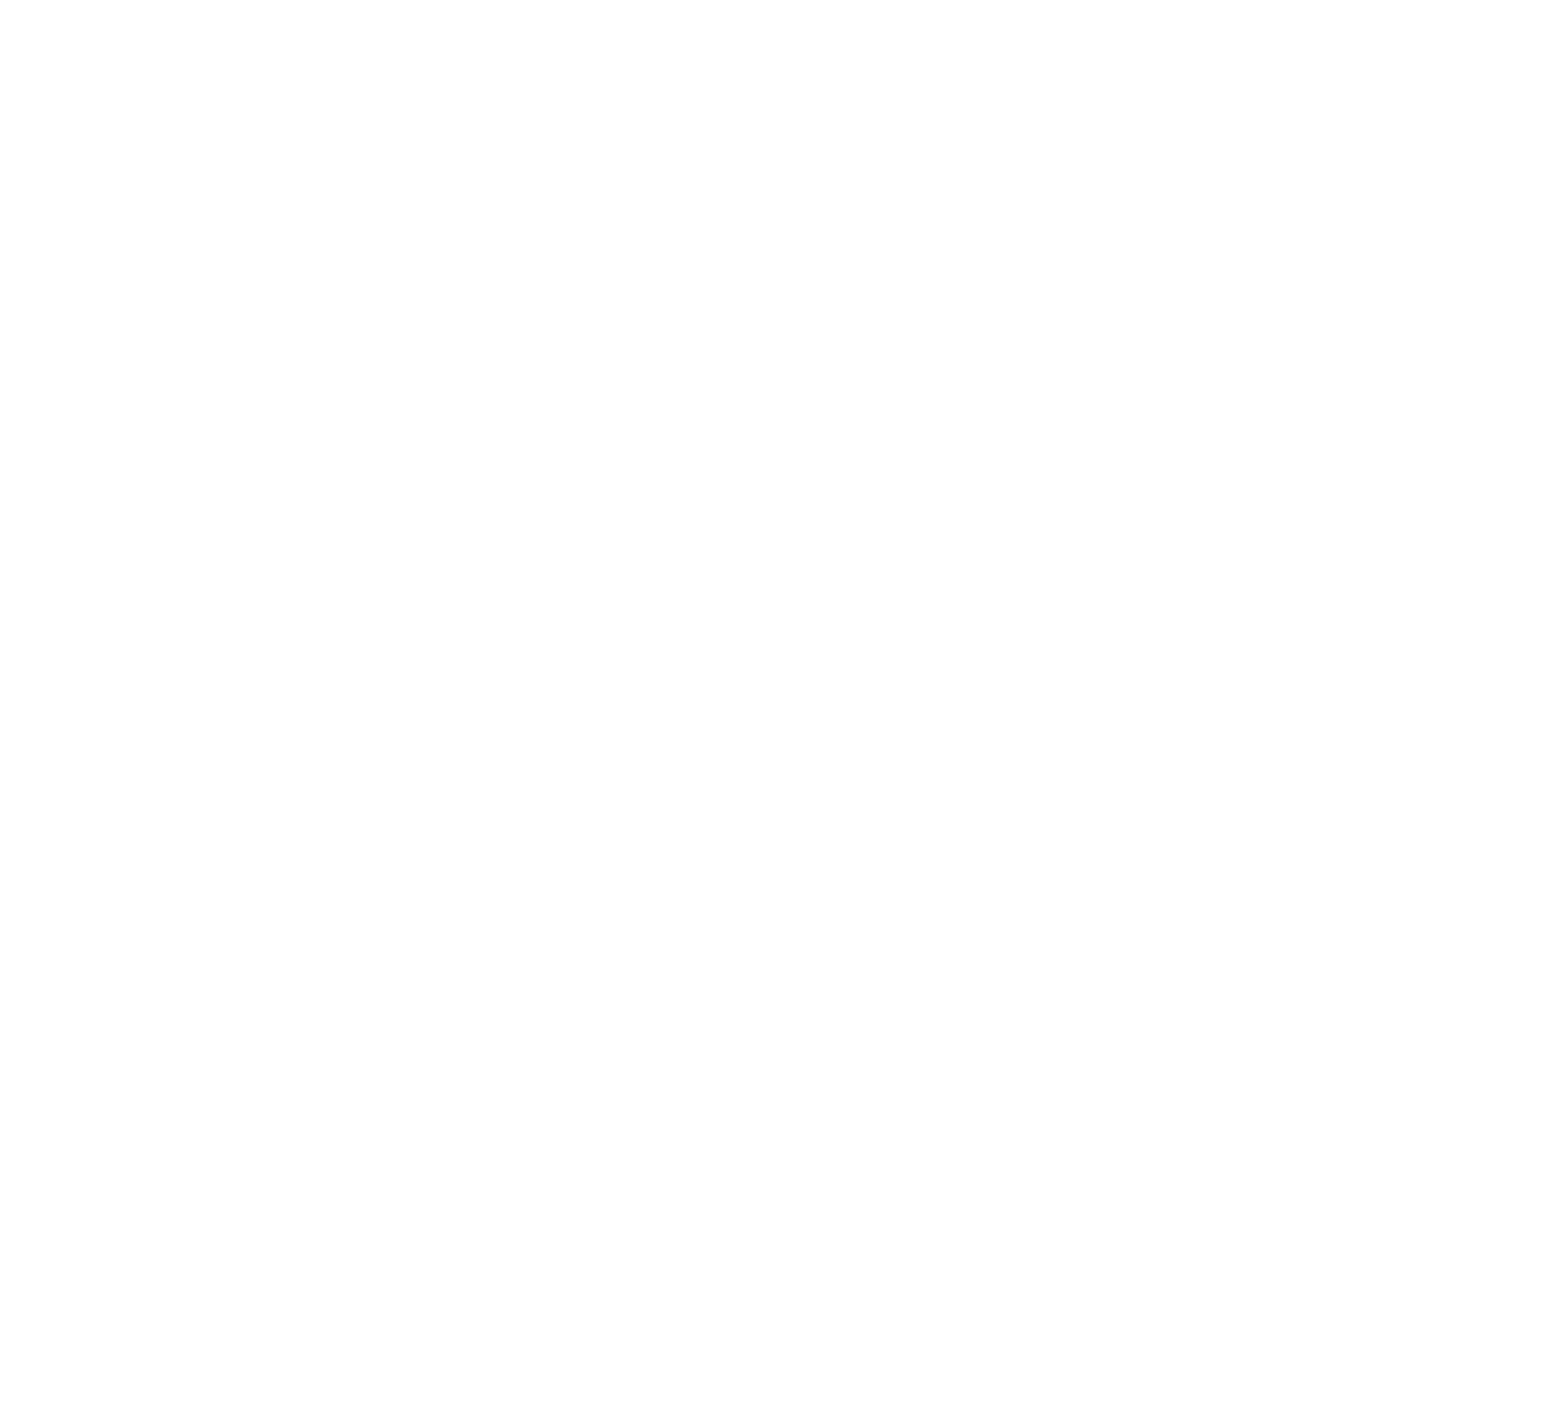 BTG Pactual logo for dark backgrounds (transparent PNG)